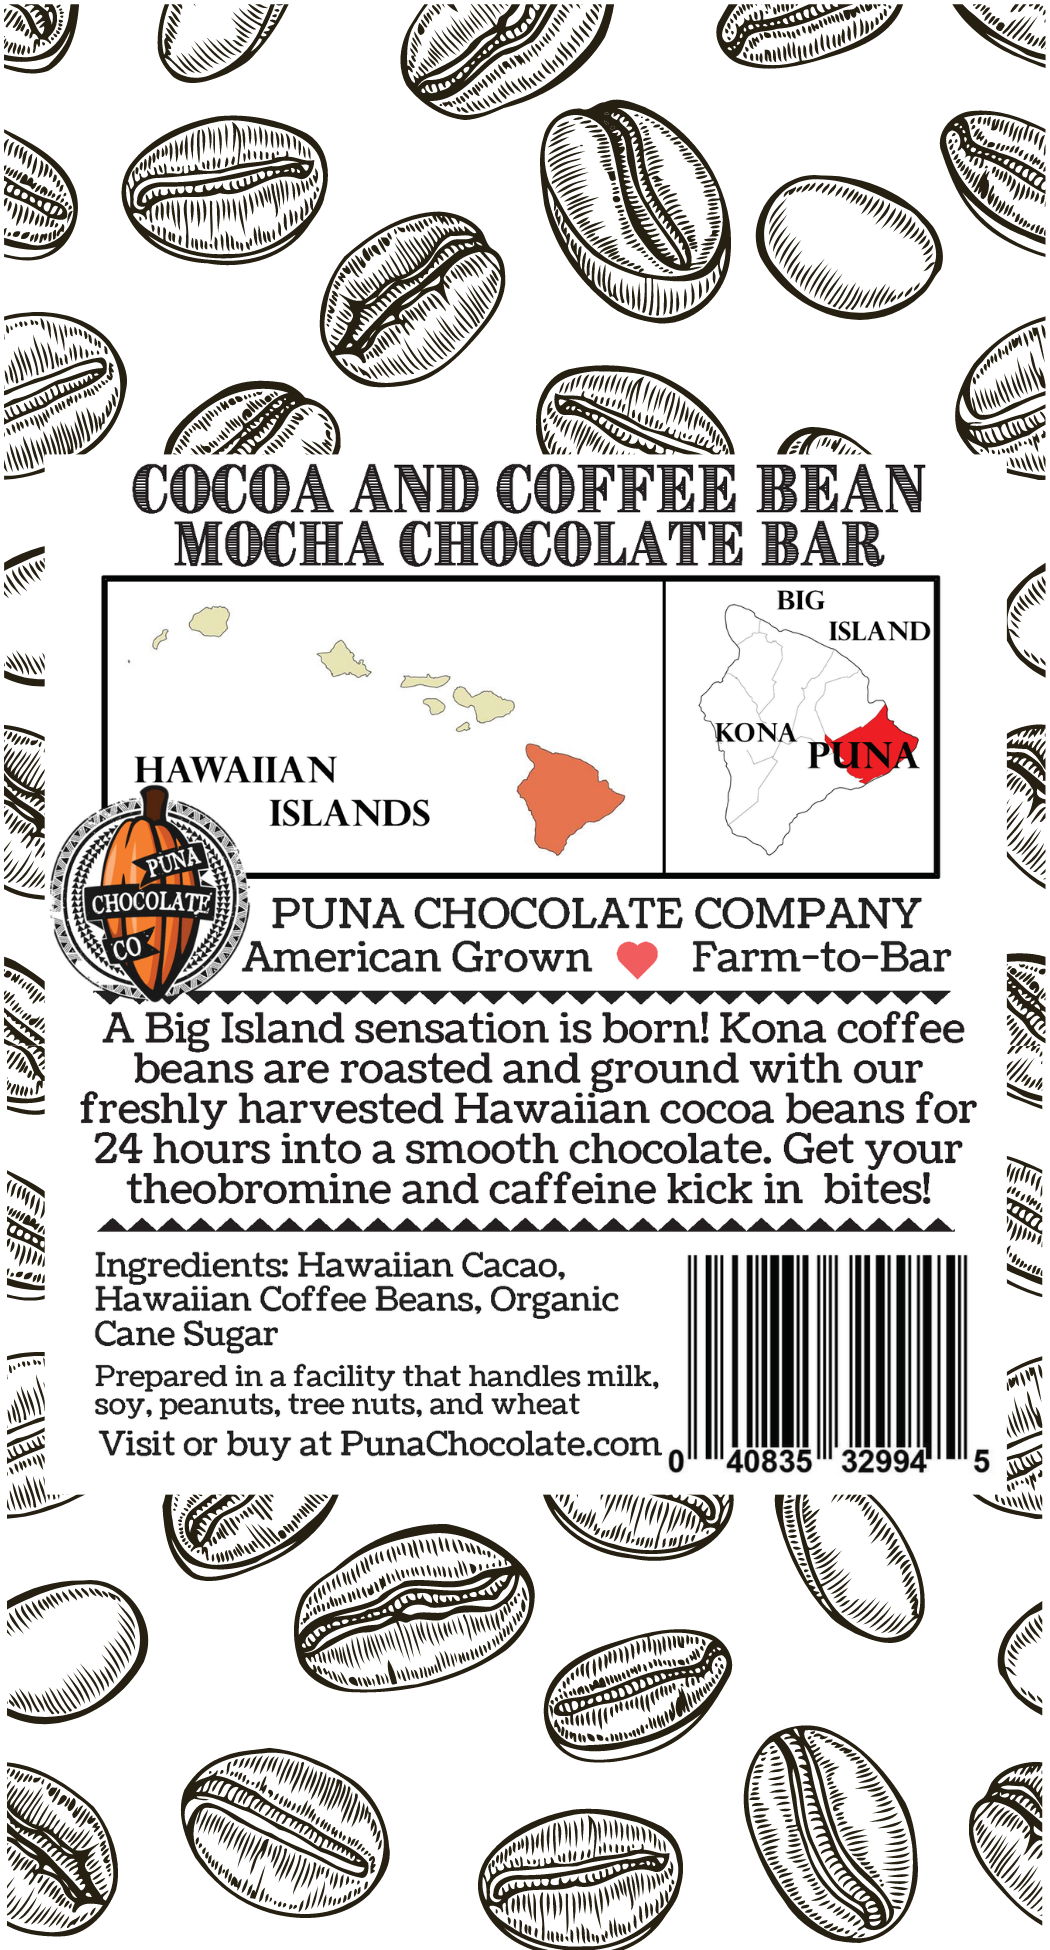 Mocha Coffee Bar - Cocoa Beans + Coffee Beans + Cane